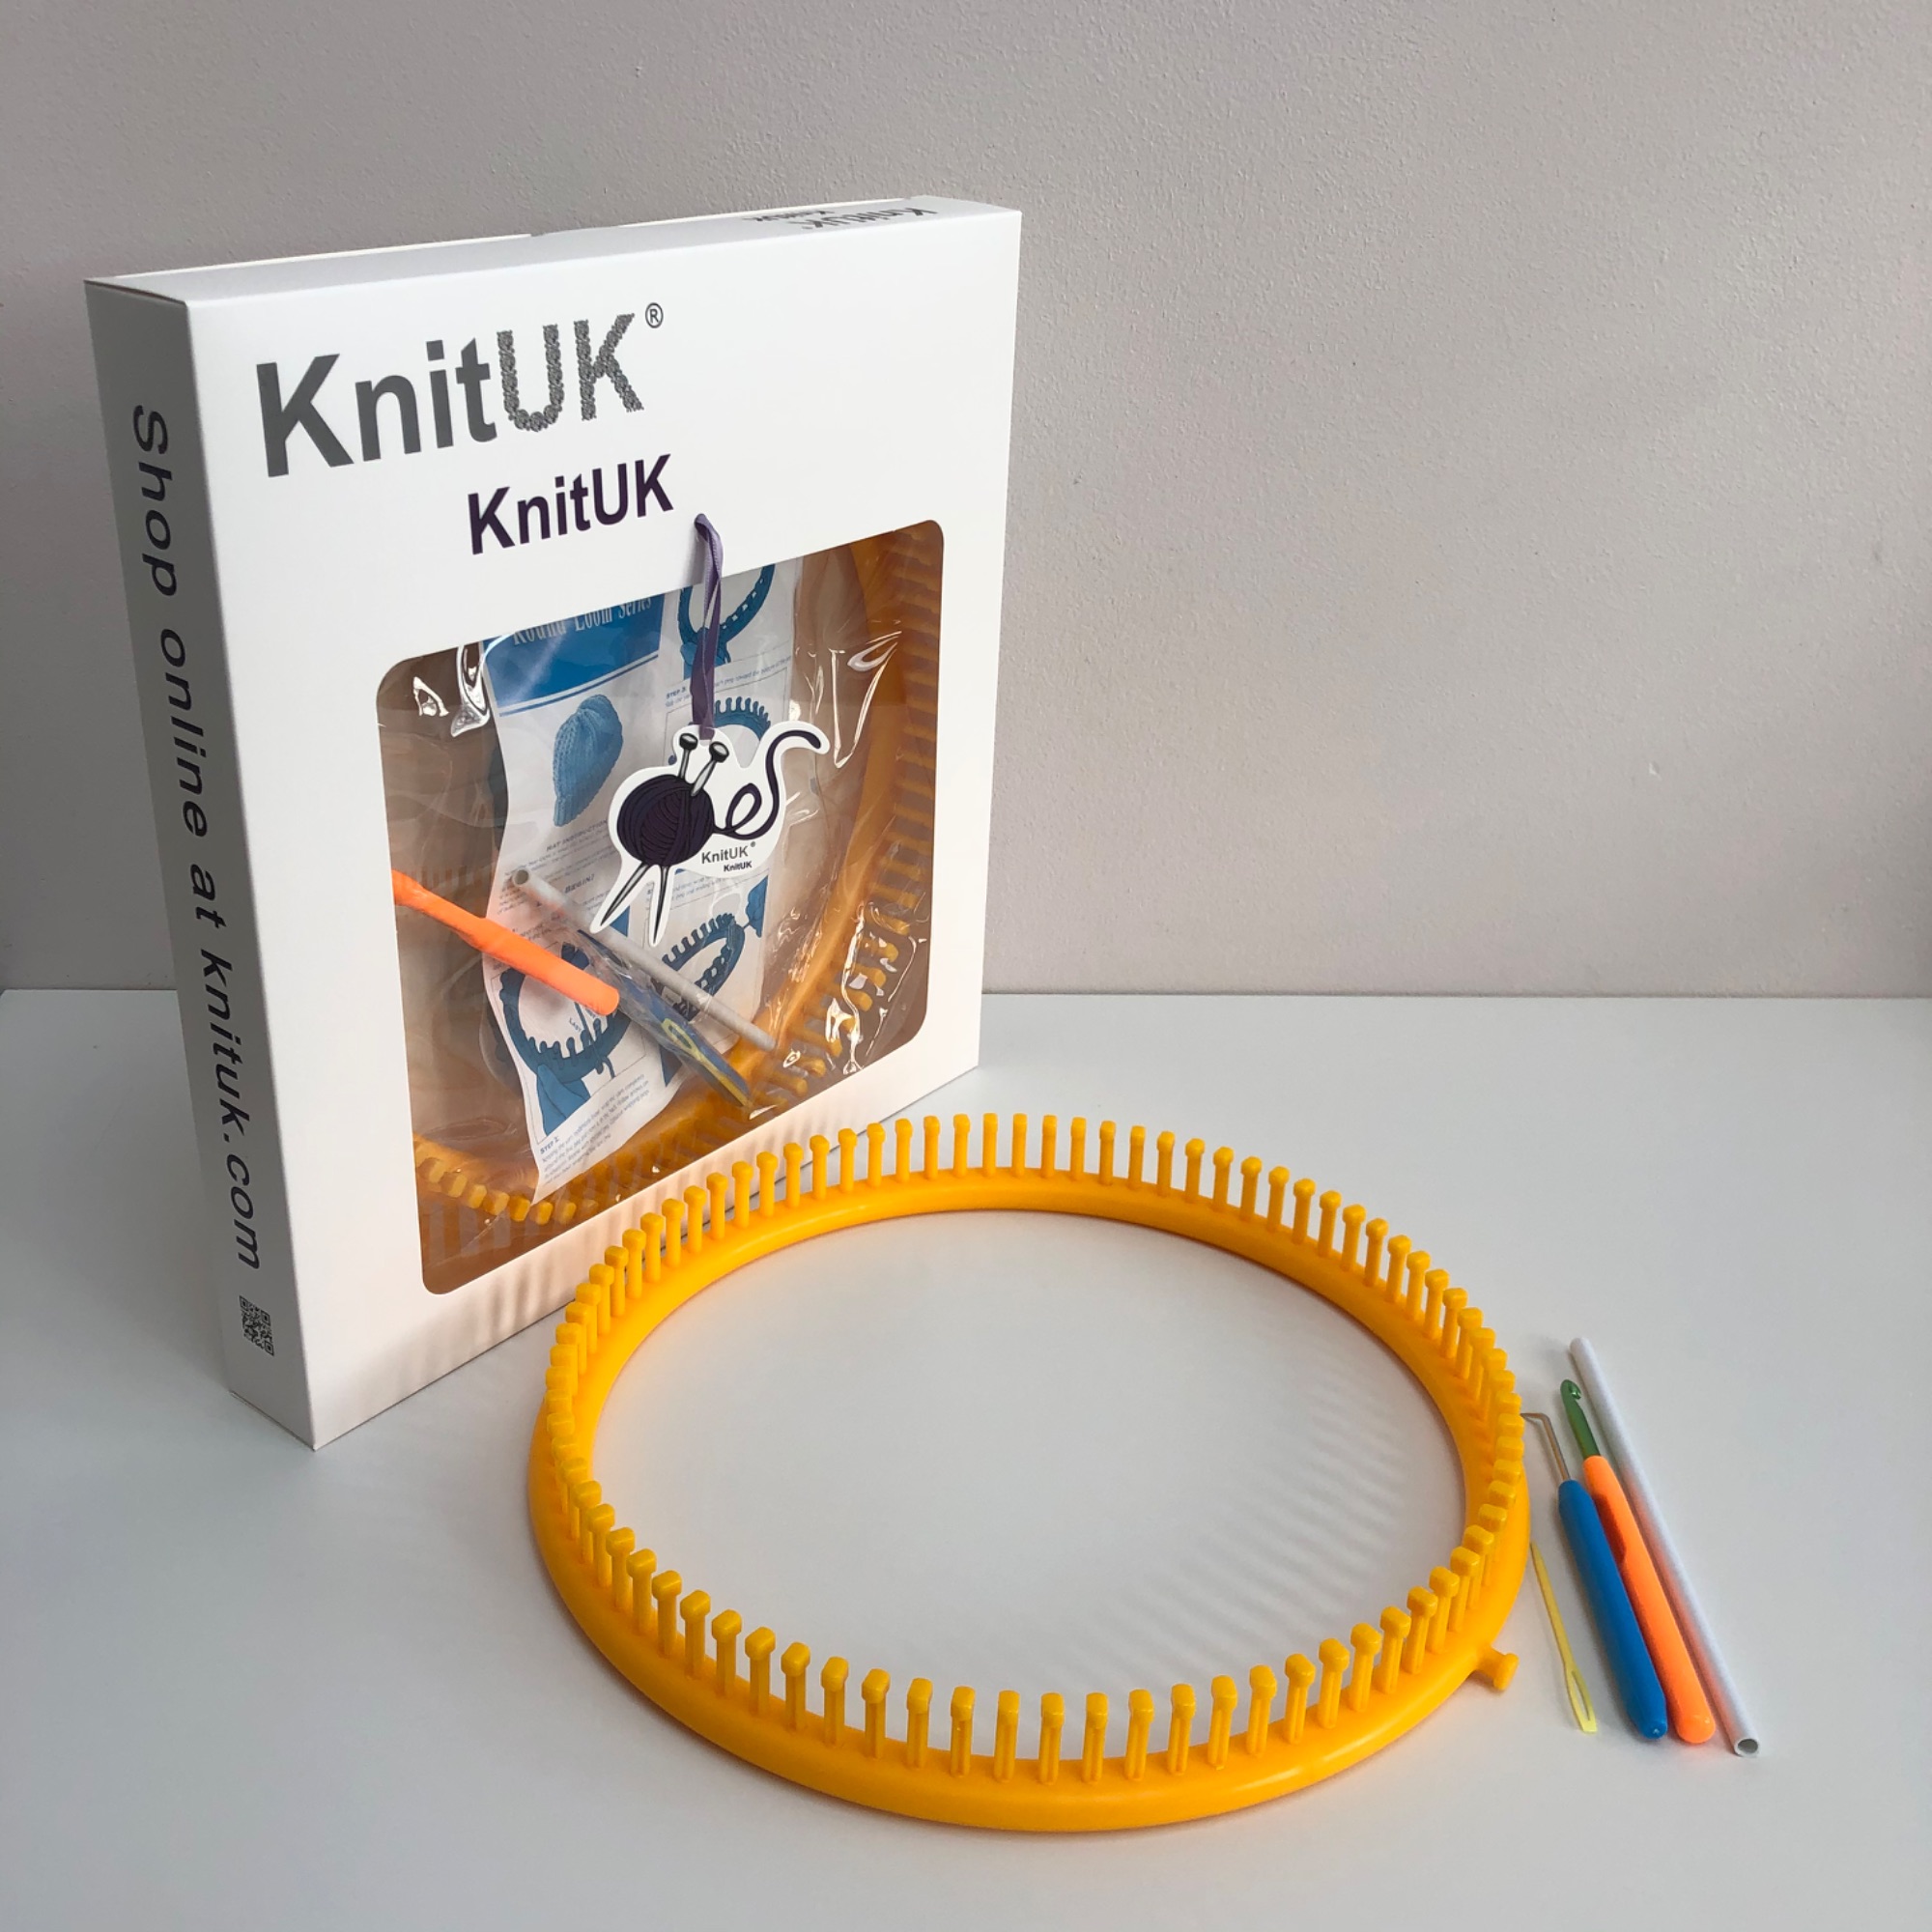 Knituk round yellow knitting loom medium gauge 82 pegs fitted box